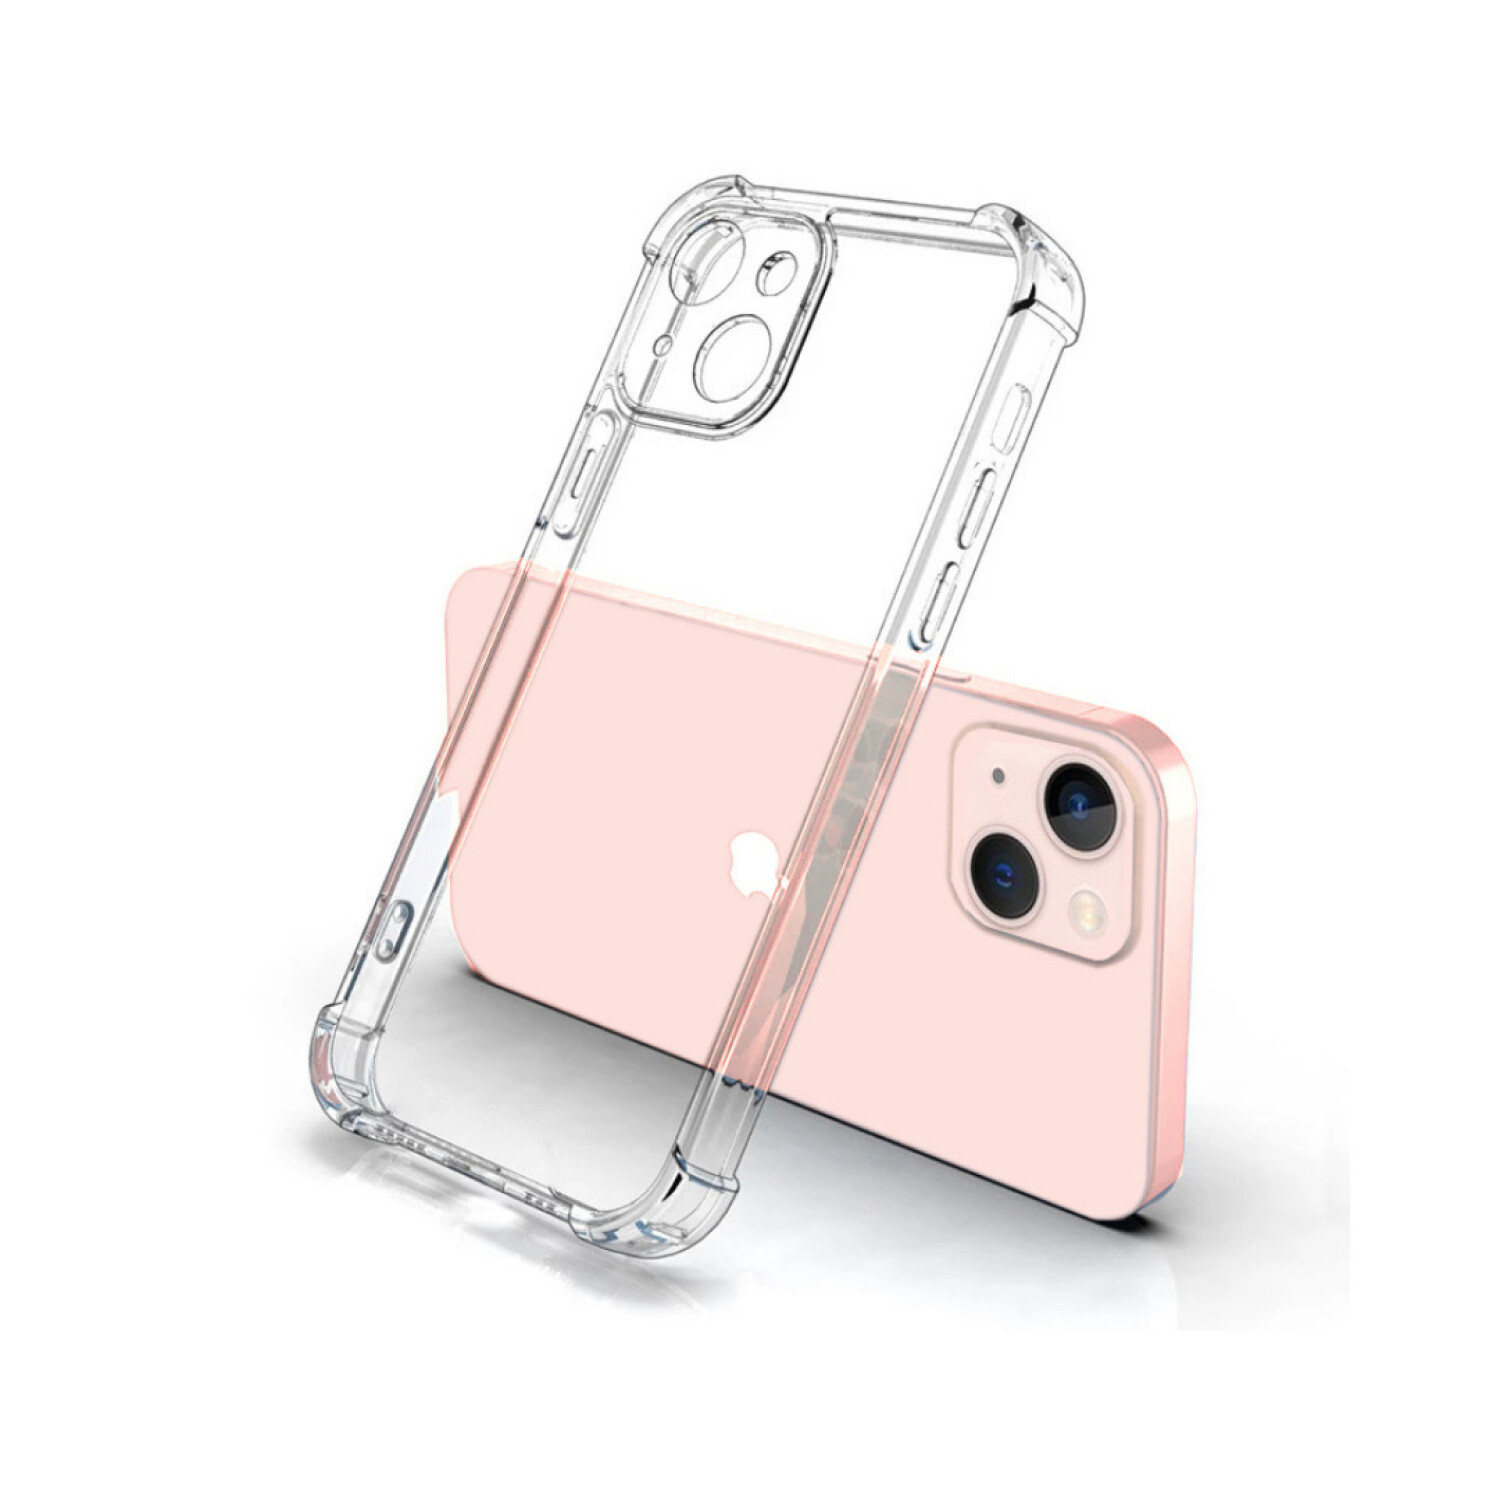 Protector de pantalla iPhone 14 Plus (cristal templado) - Funda